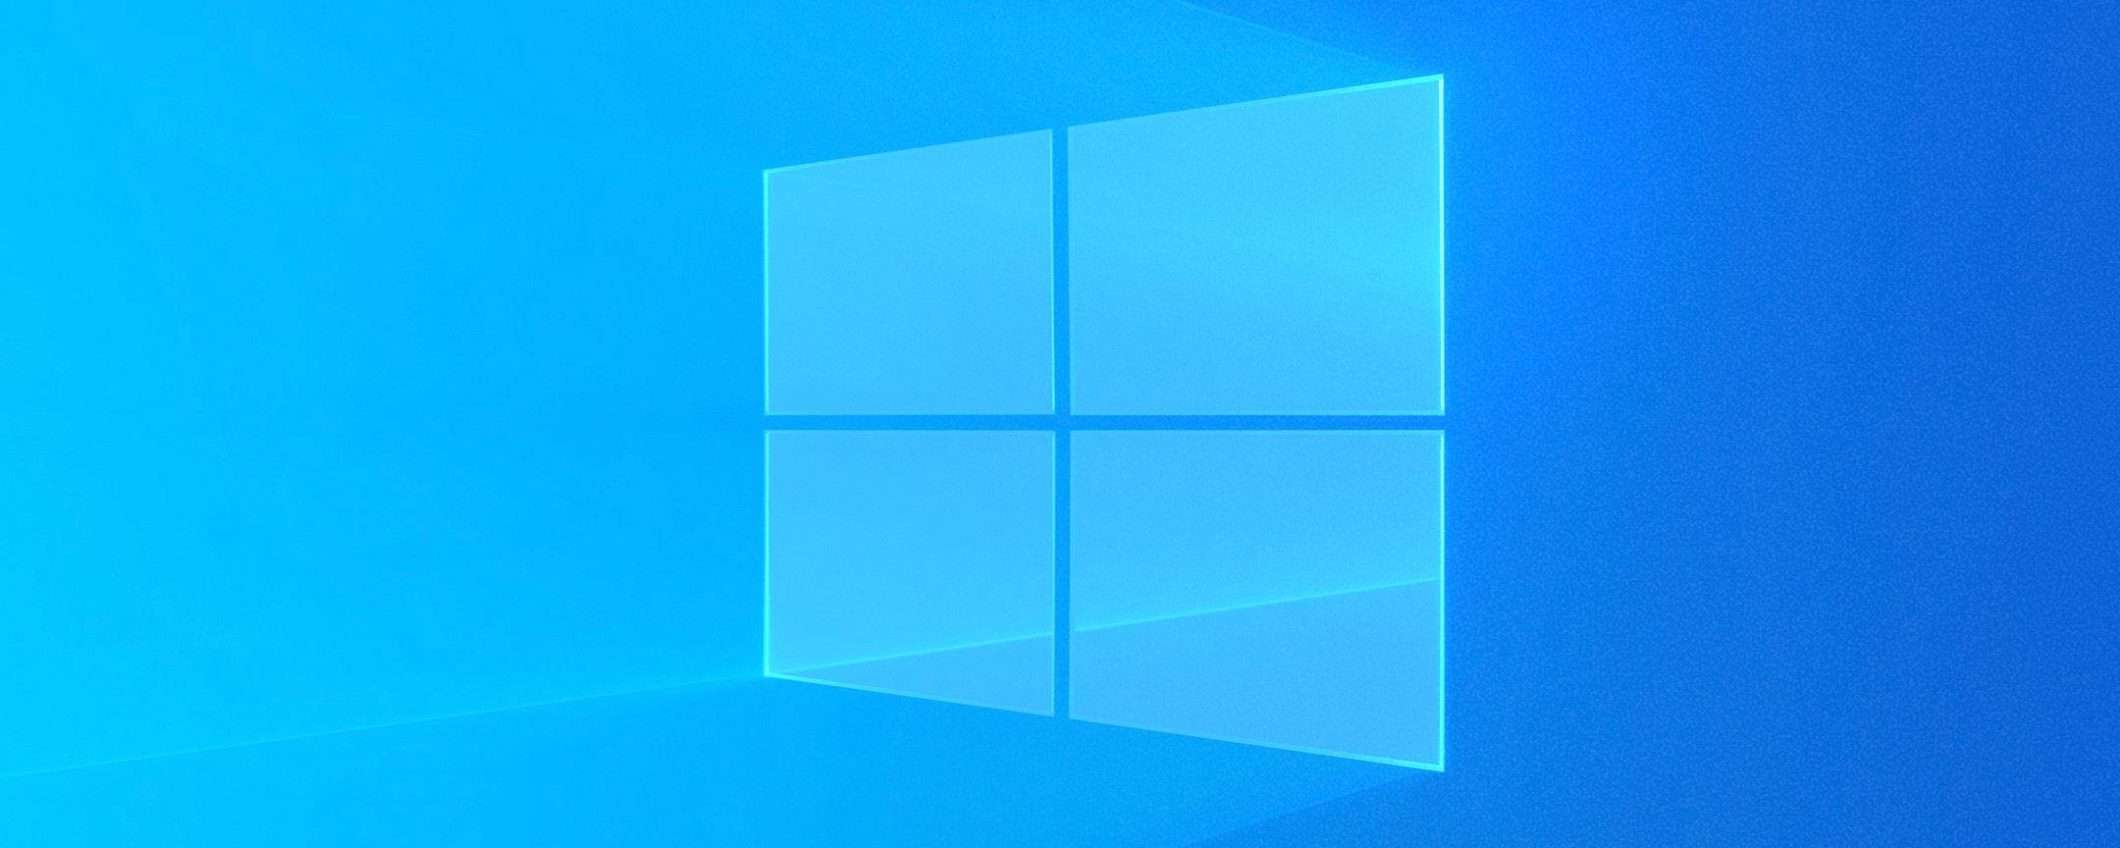 Windows 10 21H2: novità del feature update